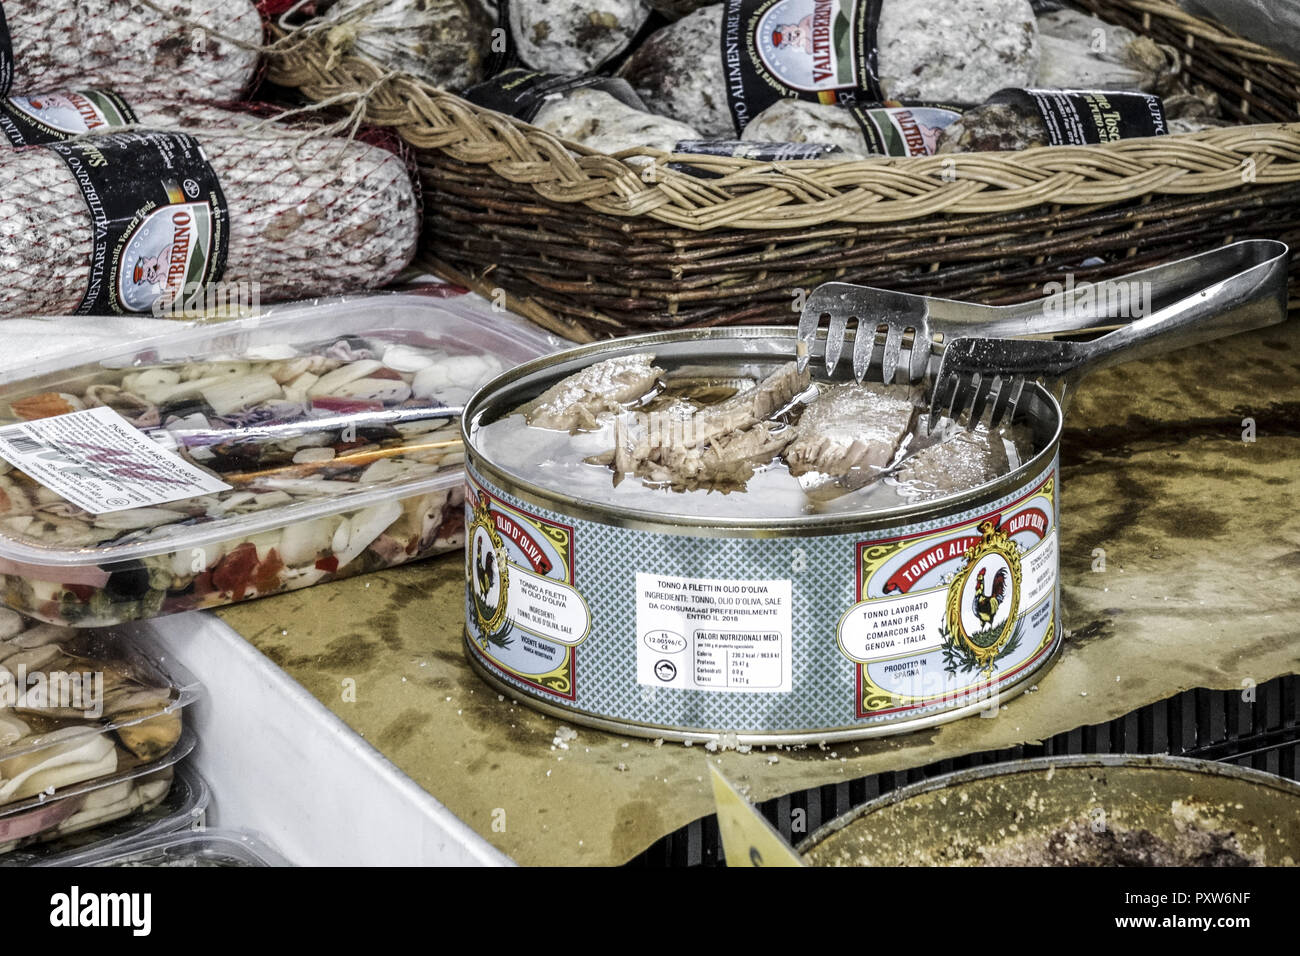 Markt, Wochenmarkt in Siena, Toscana, Italien, Europa (www.allover.cc/TPH) Foto Stock